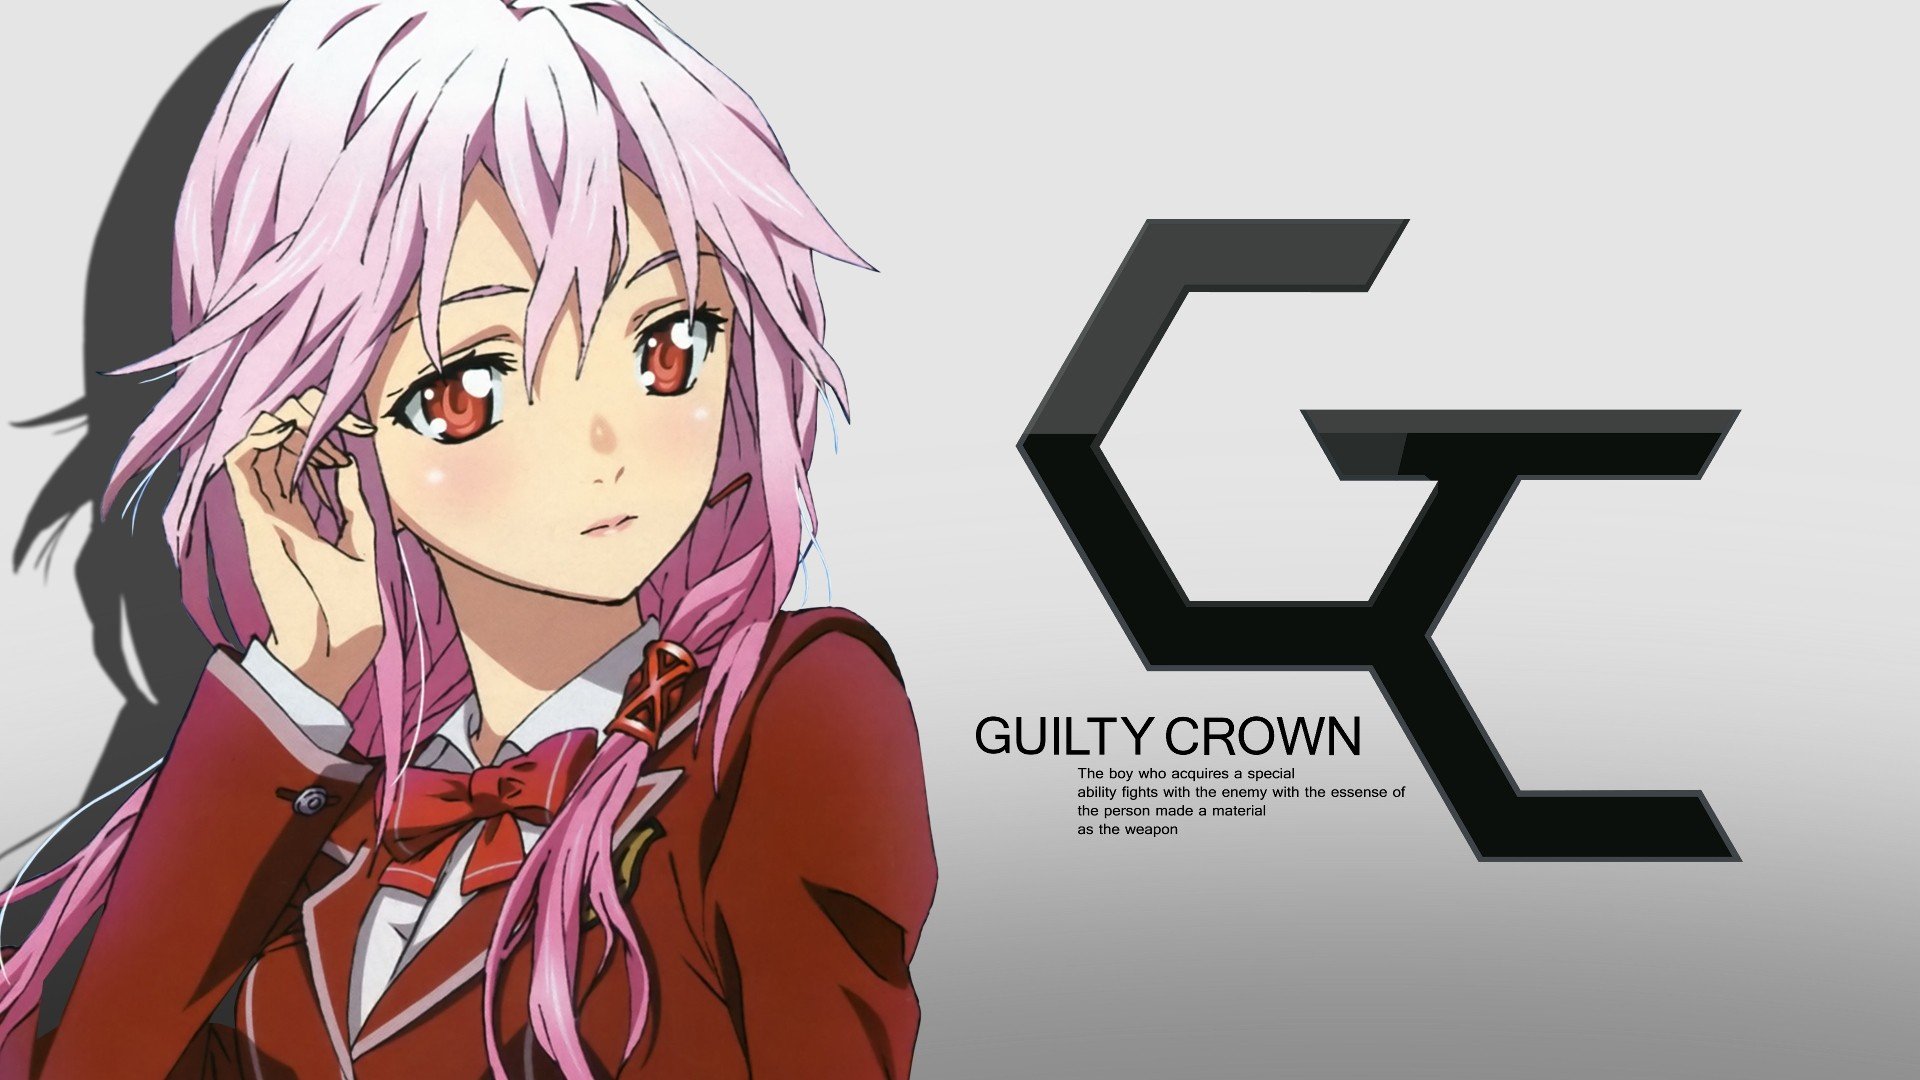 HD wallpaper: Inori Yuzuriha, Guilty Crown, anime girls, white